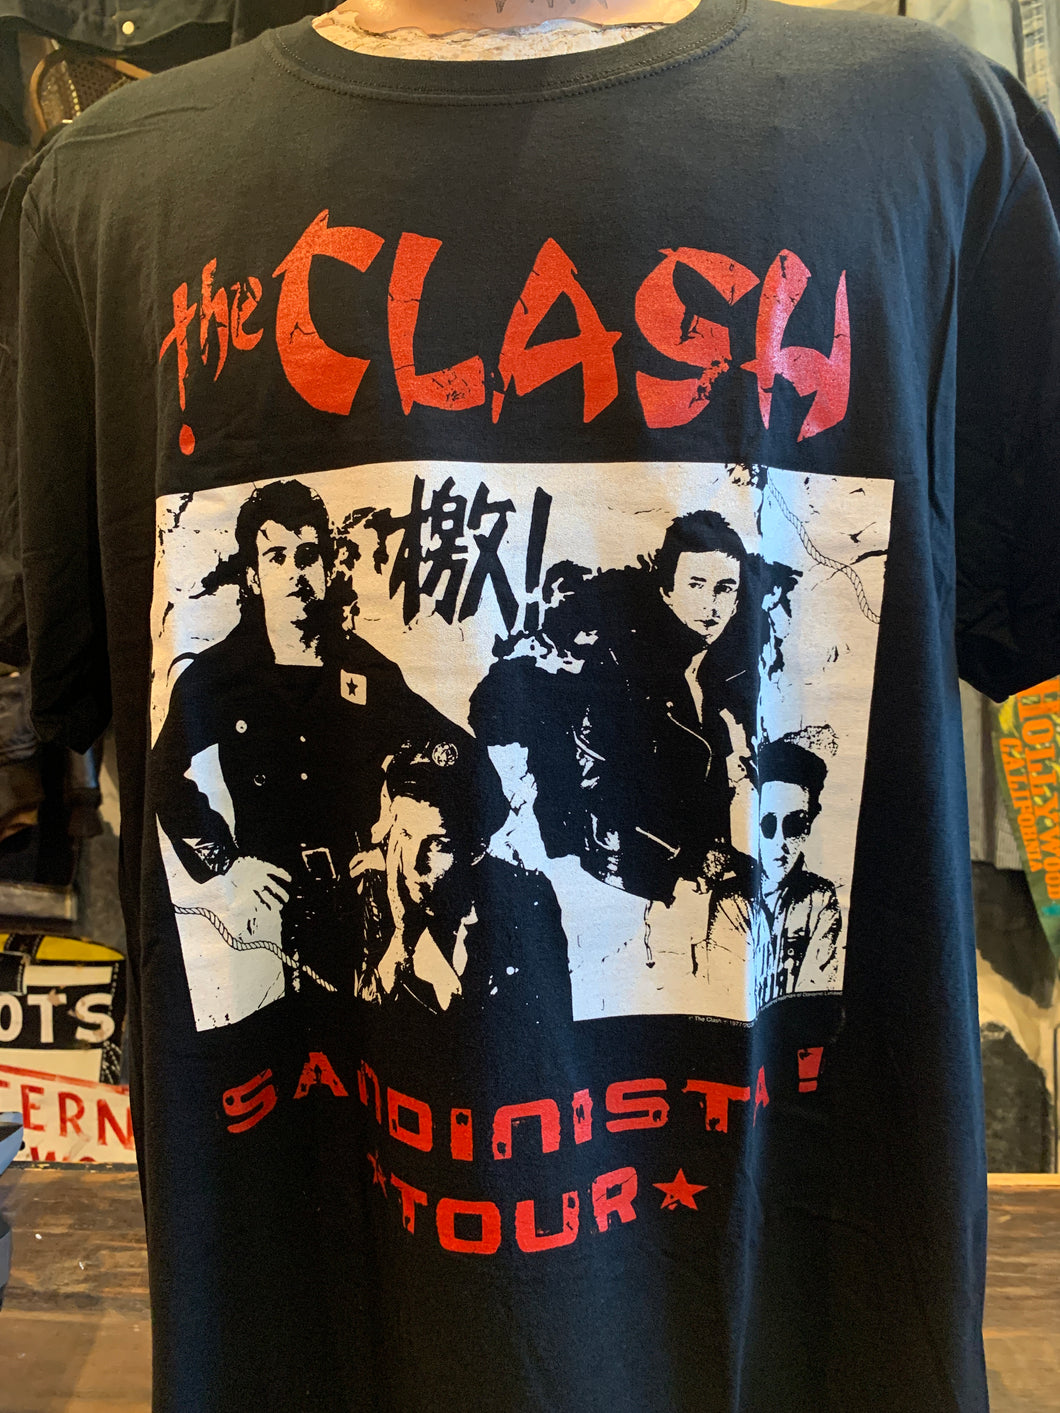 The Clash, Sandinista Tour